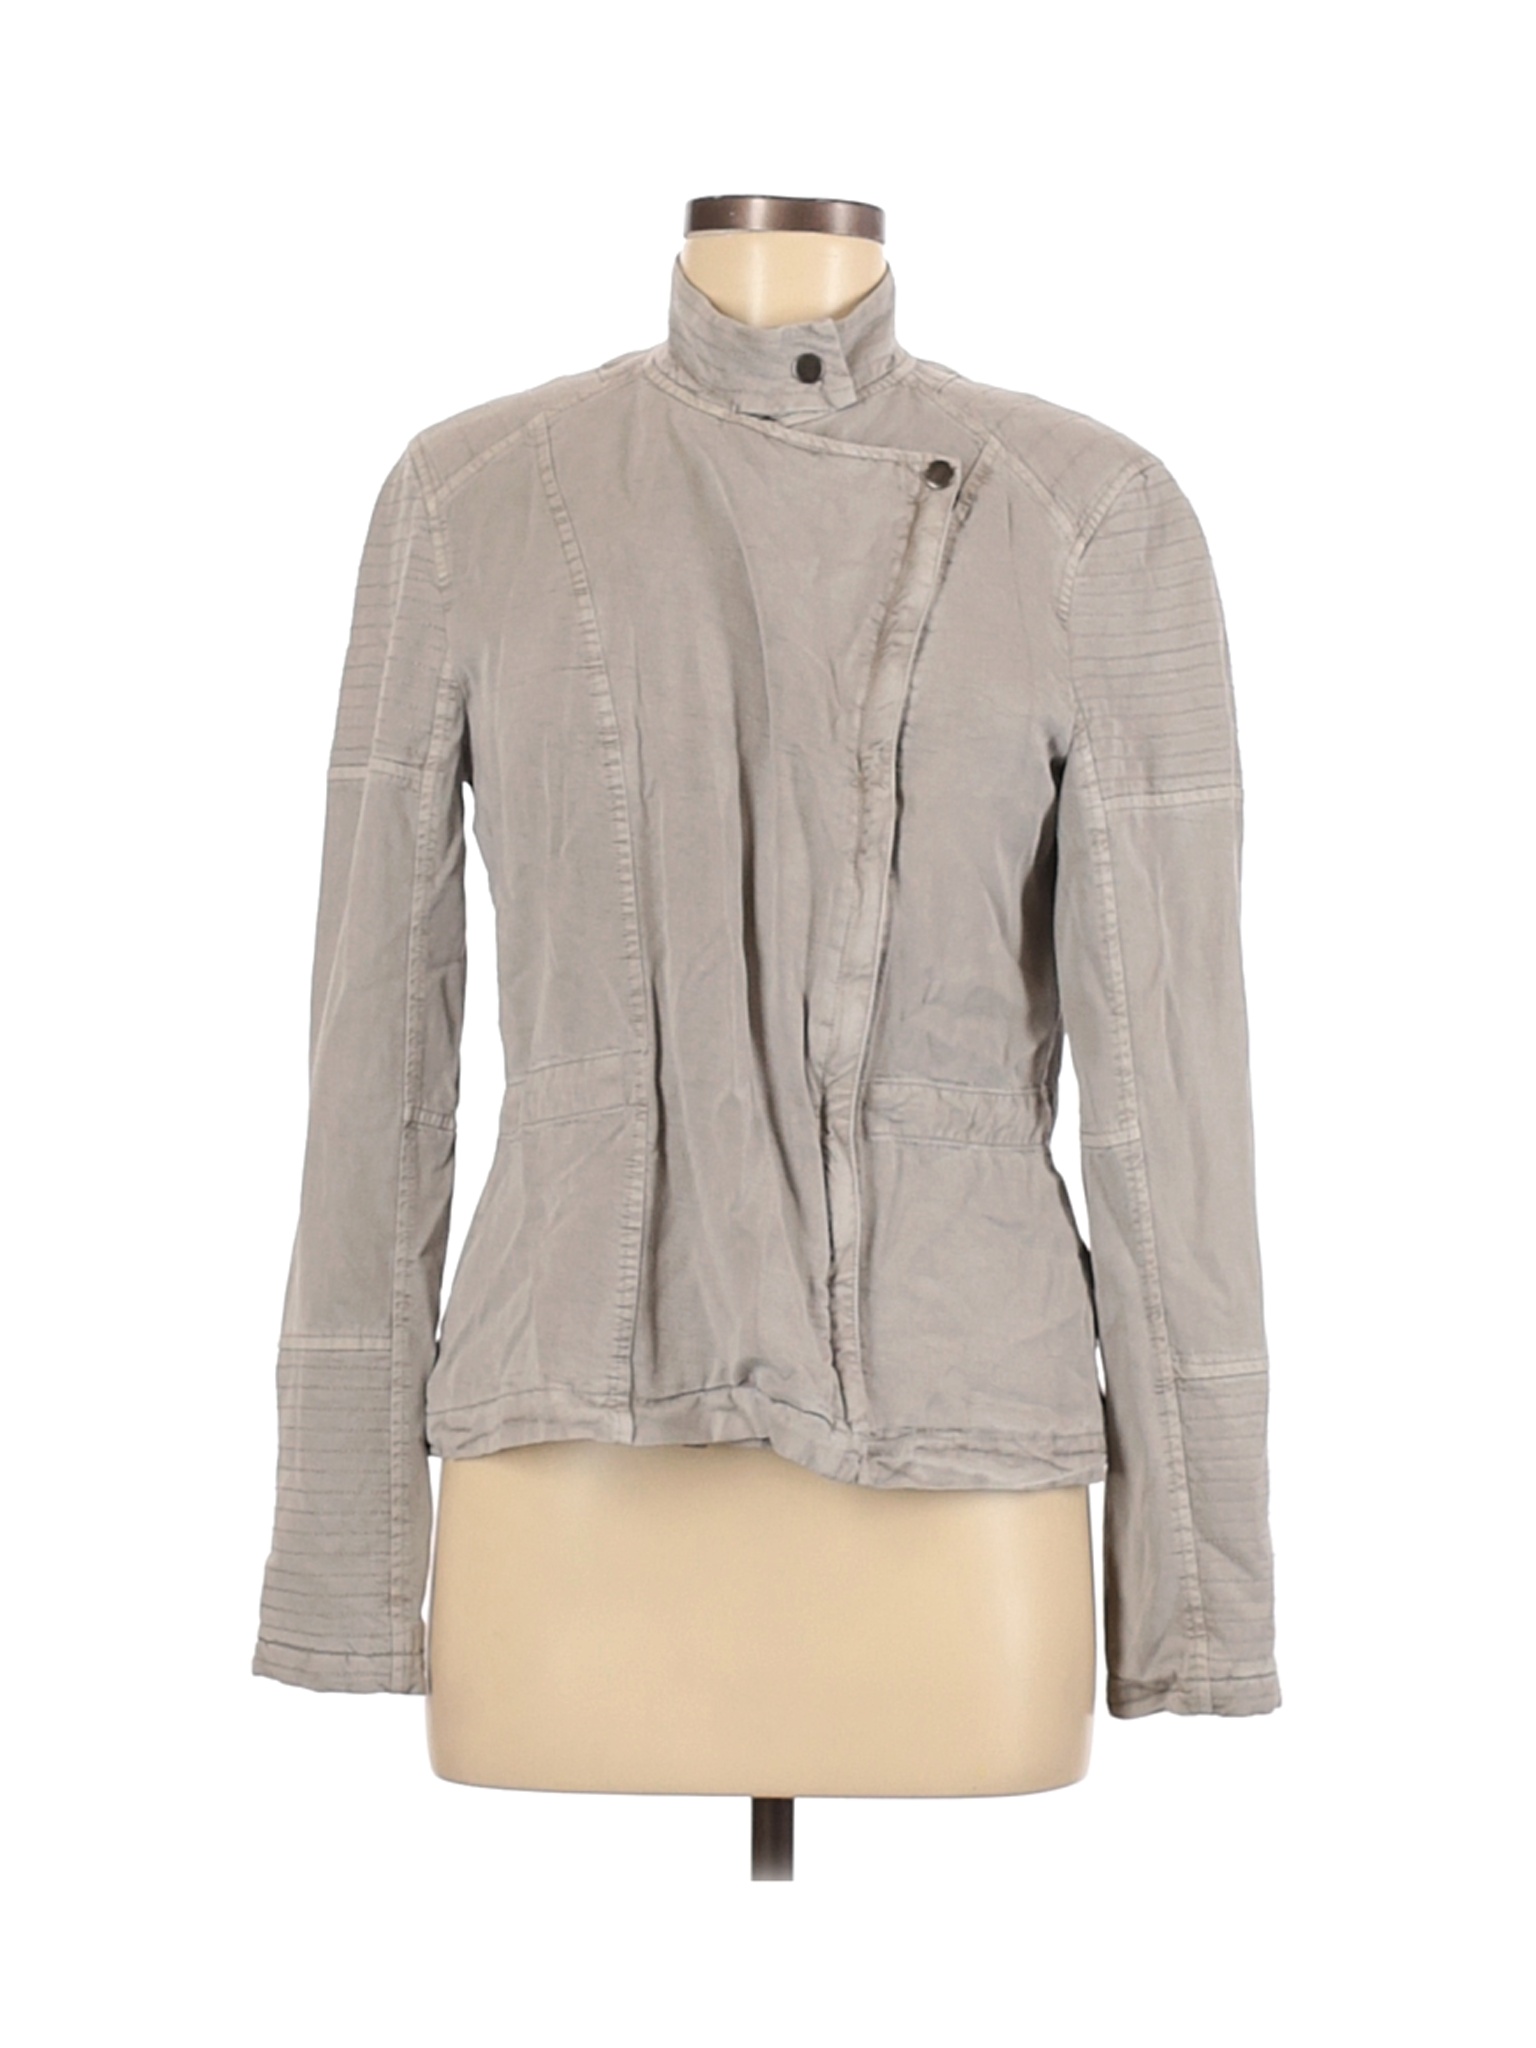 Lucky Brand Women Gray Jacket M | eBay